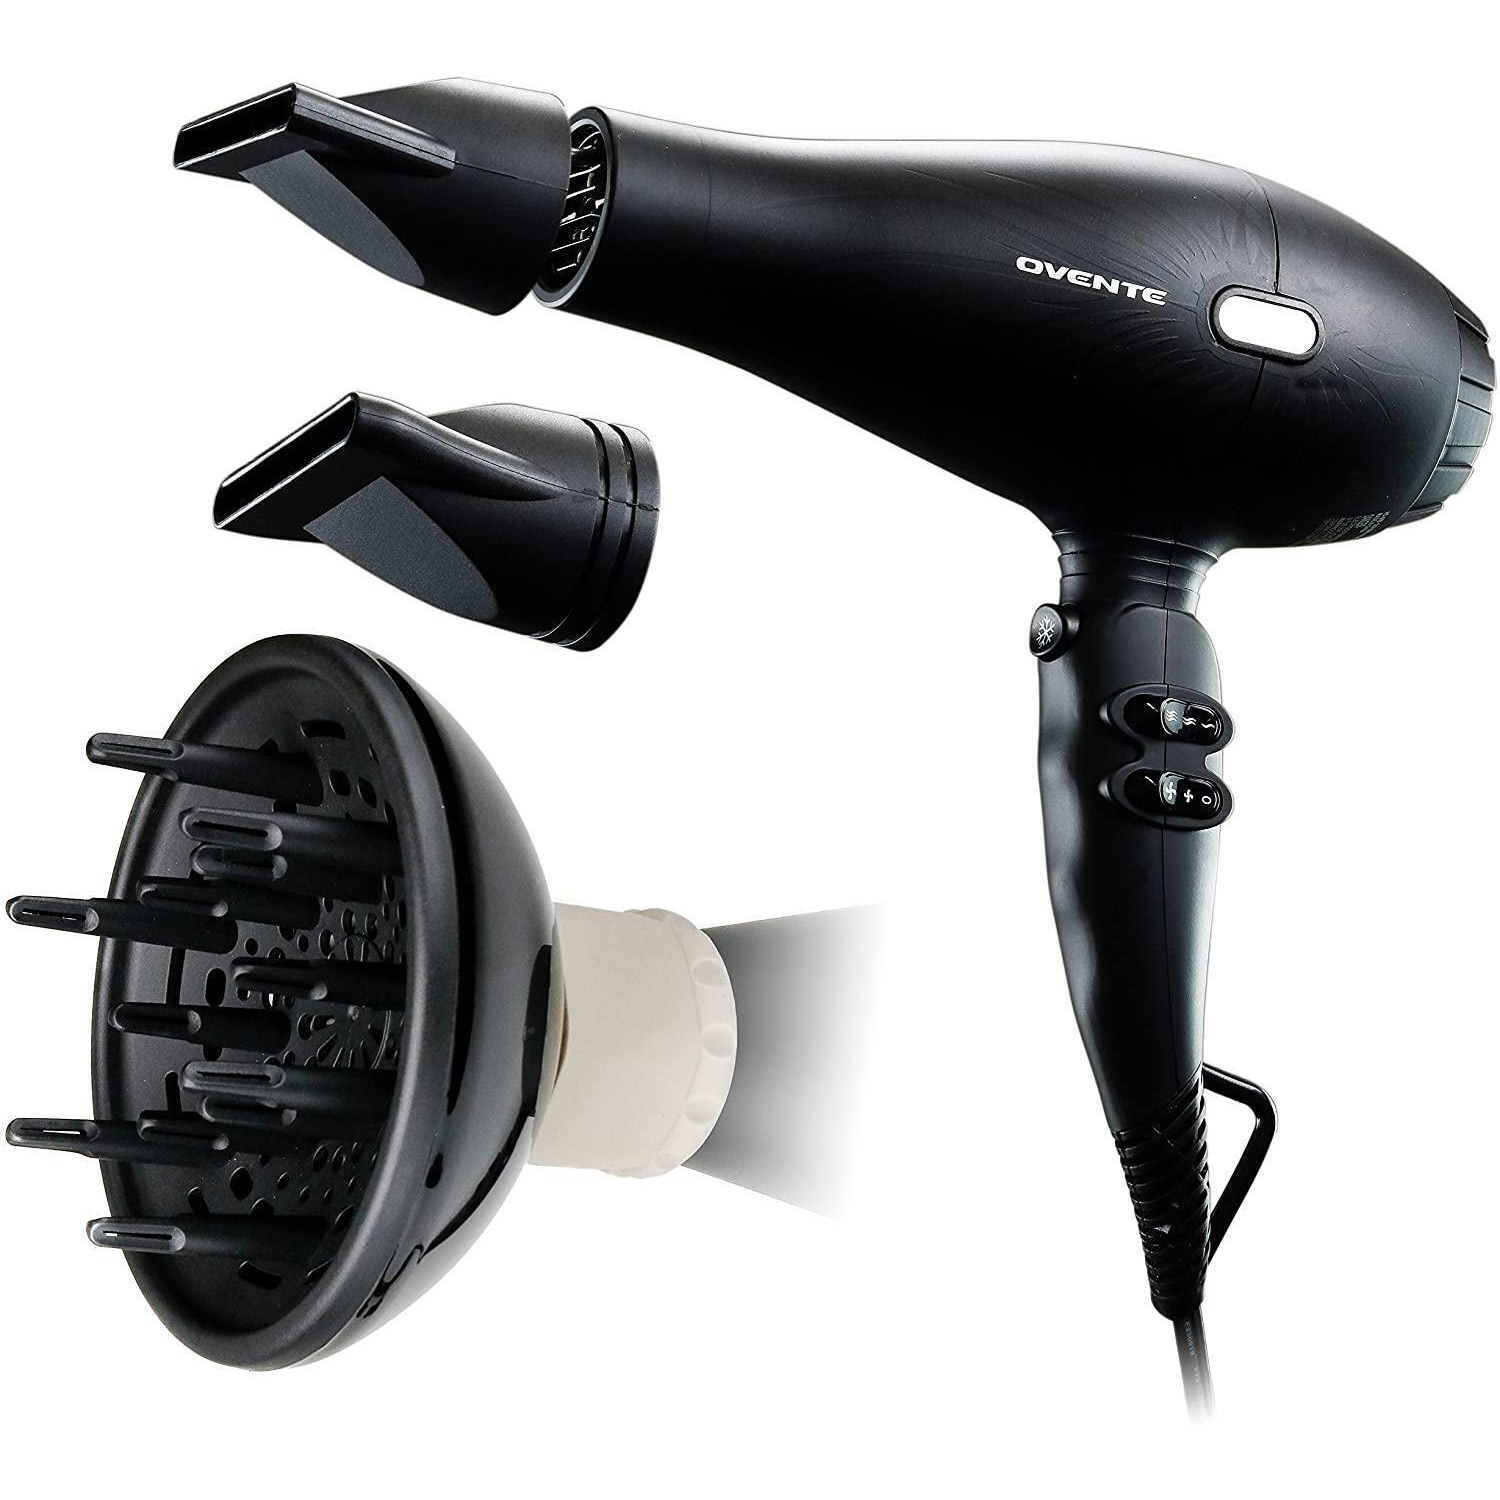 Ovente Professional Hair Dryer 1875 Watts 2 Speed & 3 Heat Settings Black